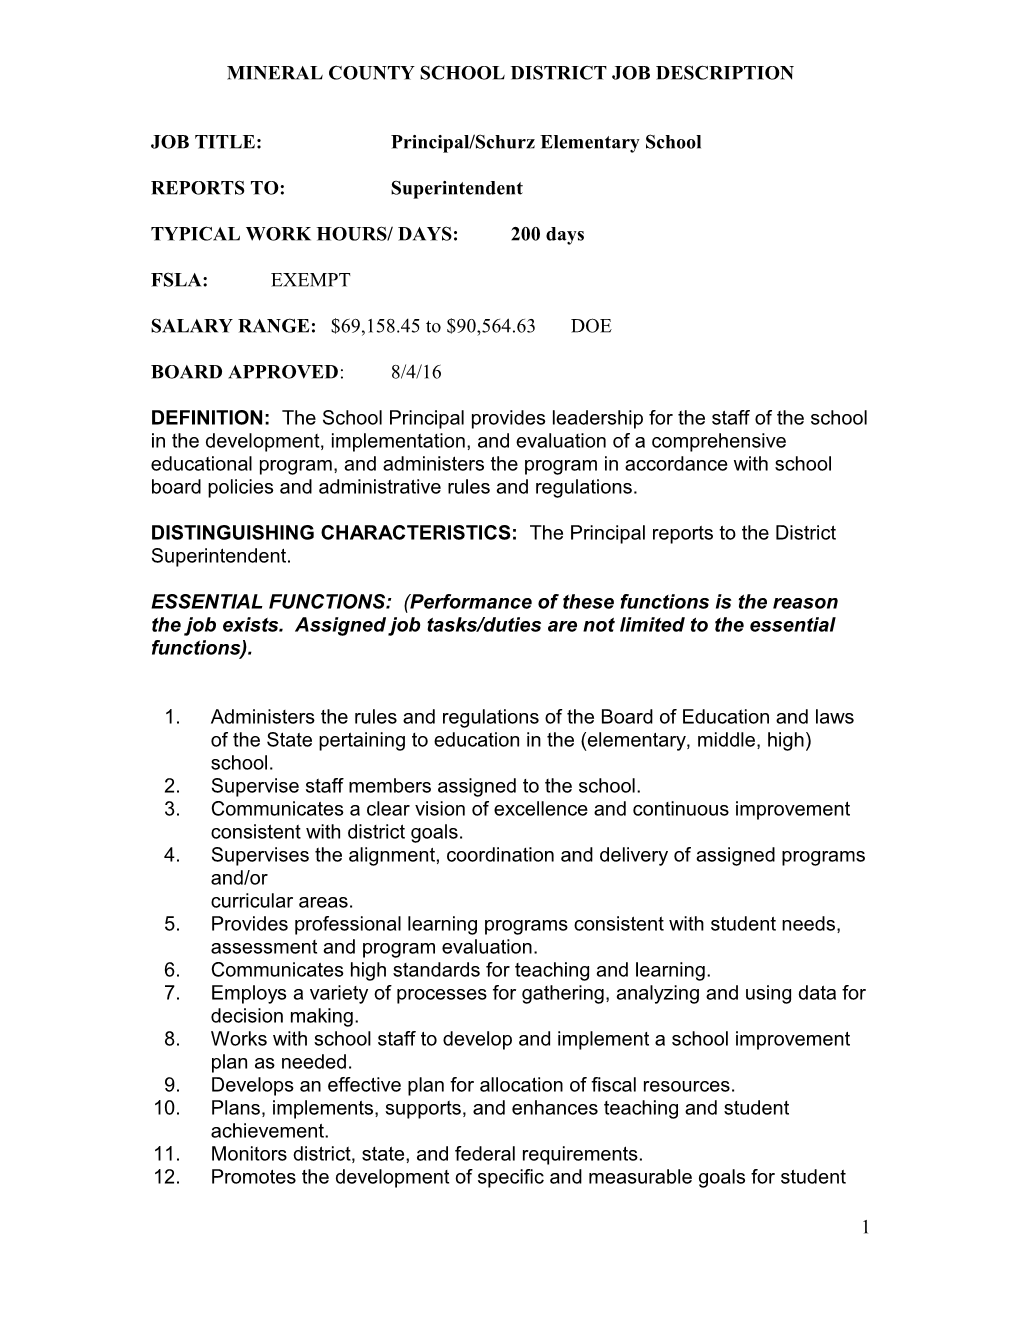 Mineral Countyschool District Job Description